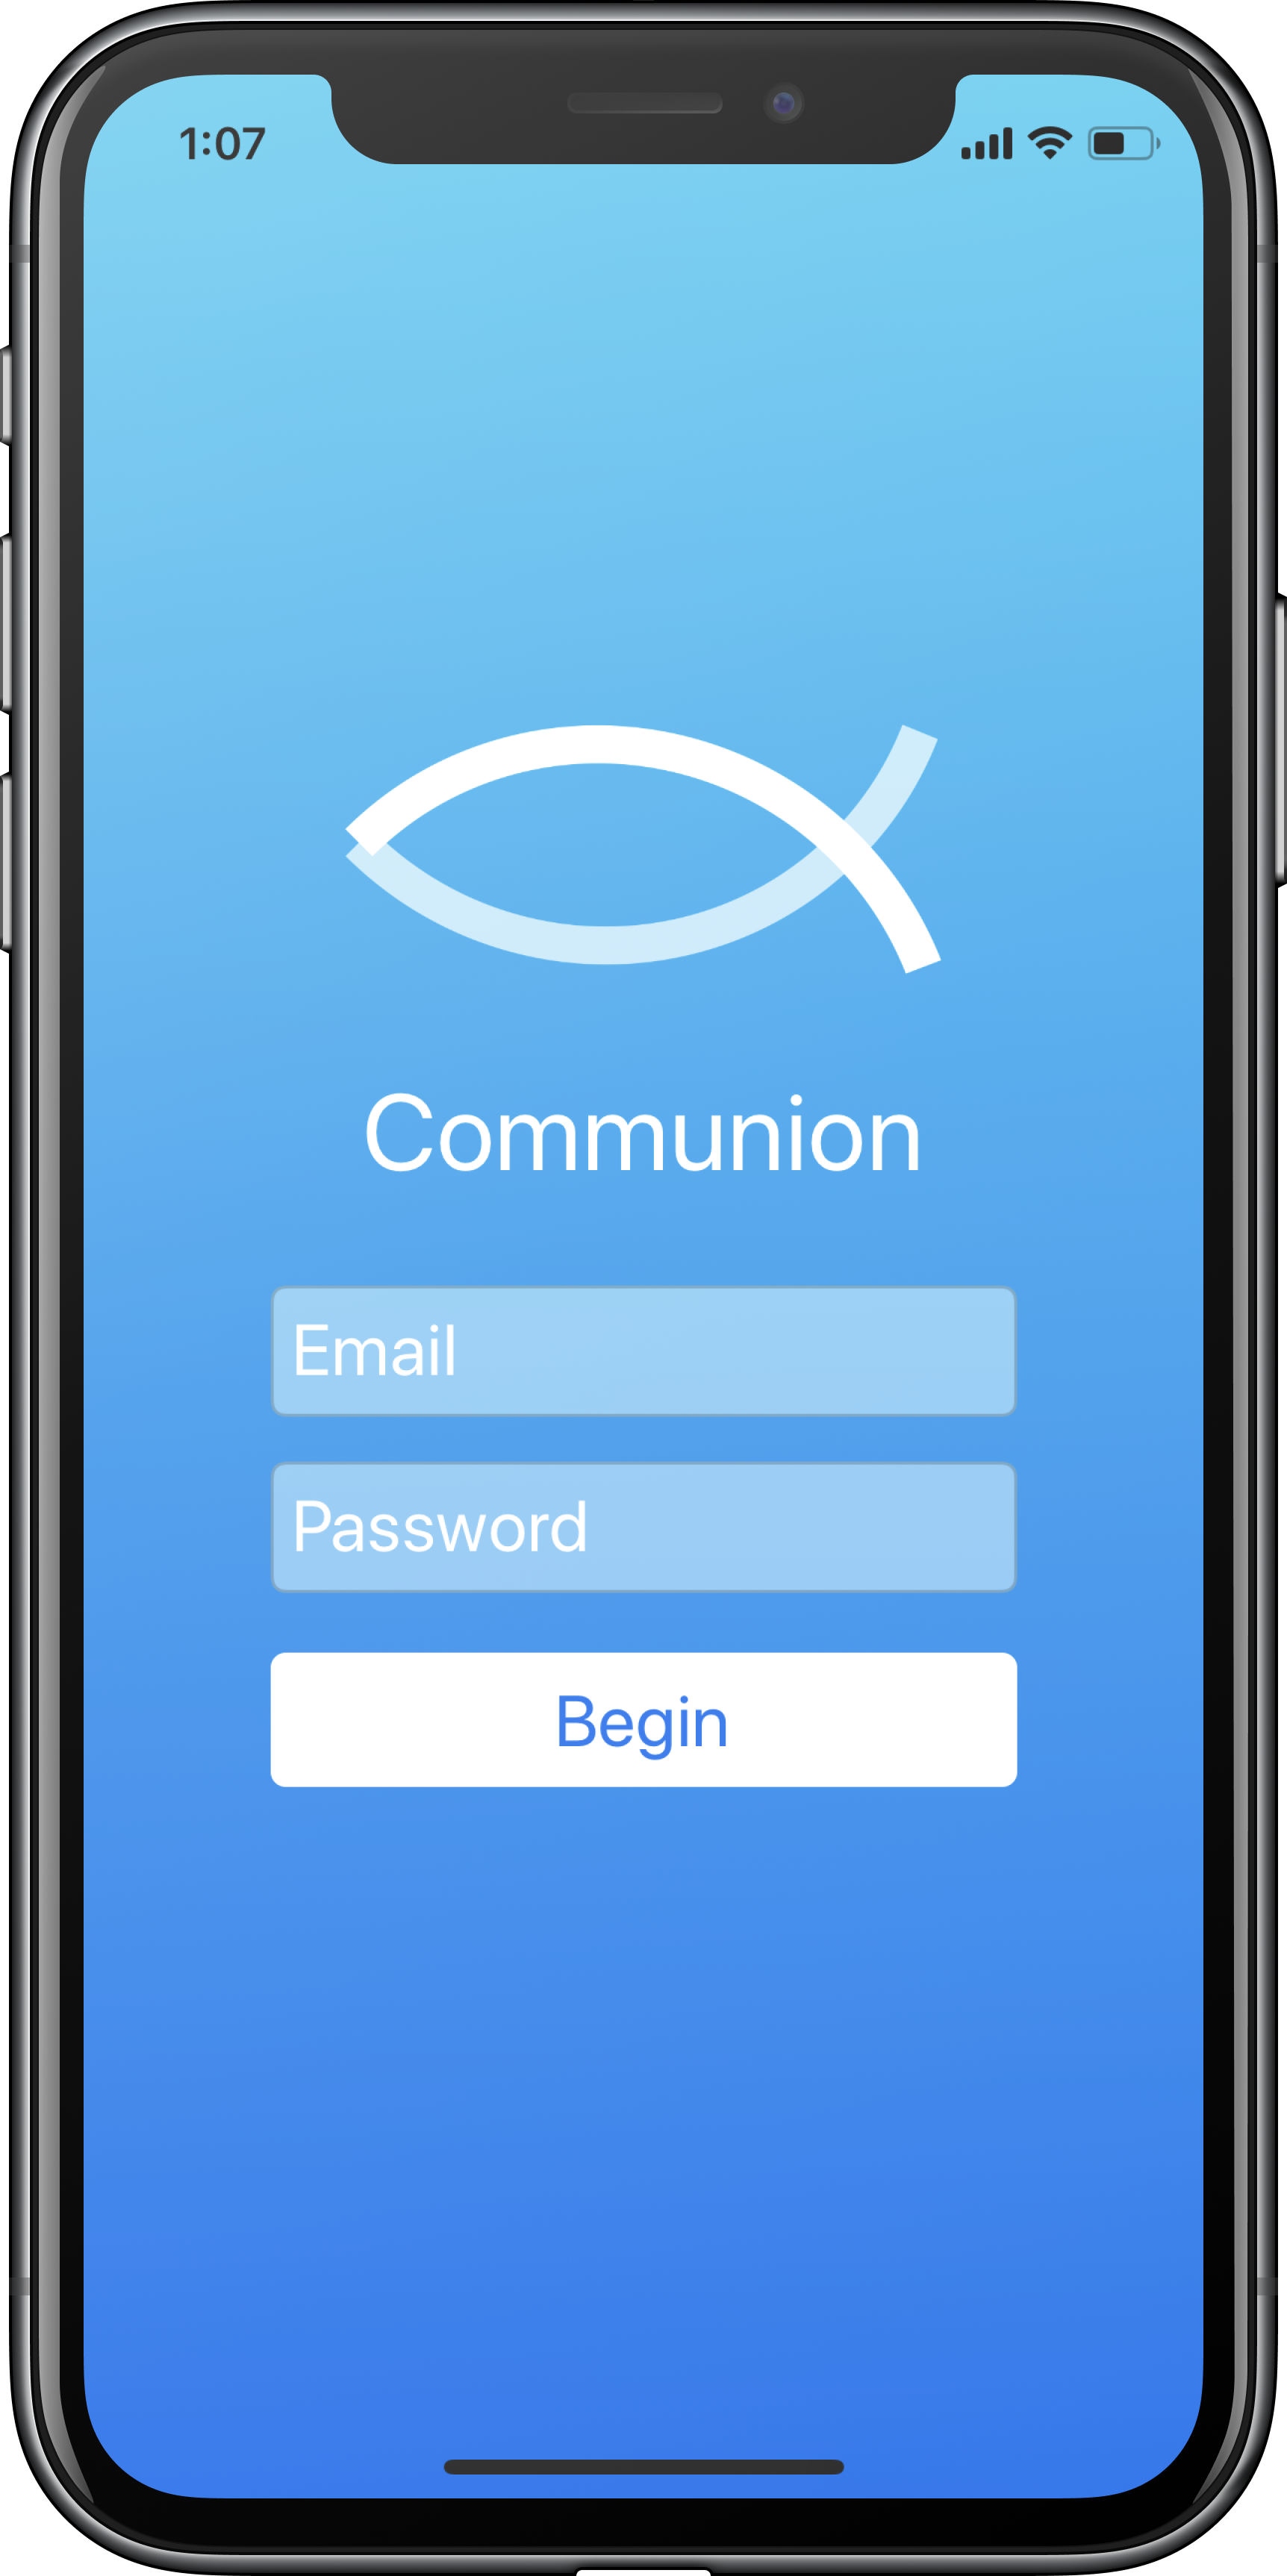 Communion App iPhone X Login